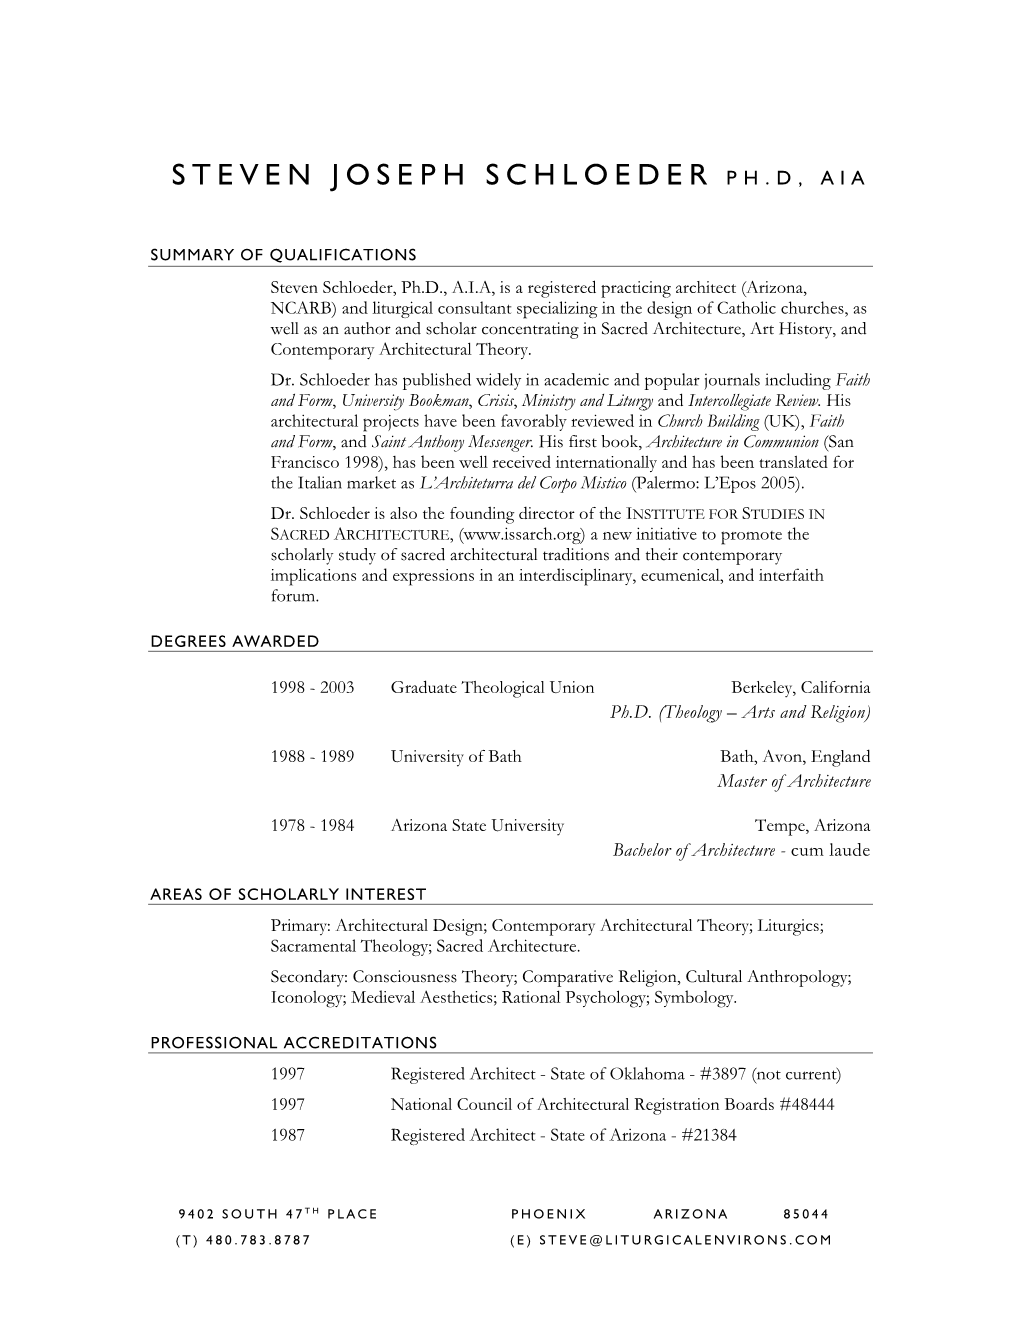 Steven Joseph Schloeder Ph.D, Aia